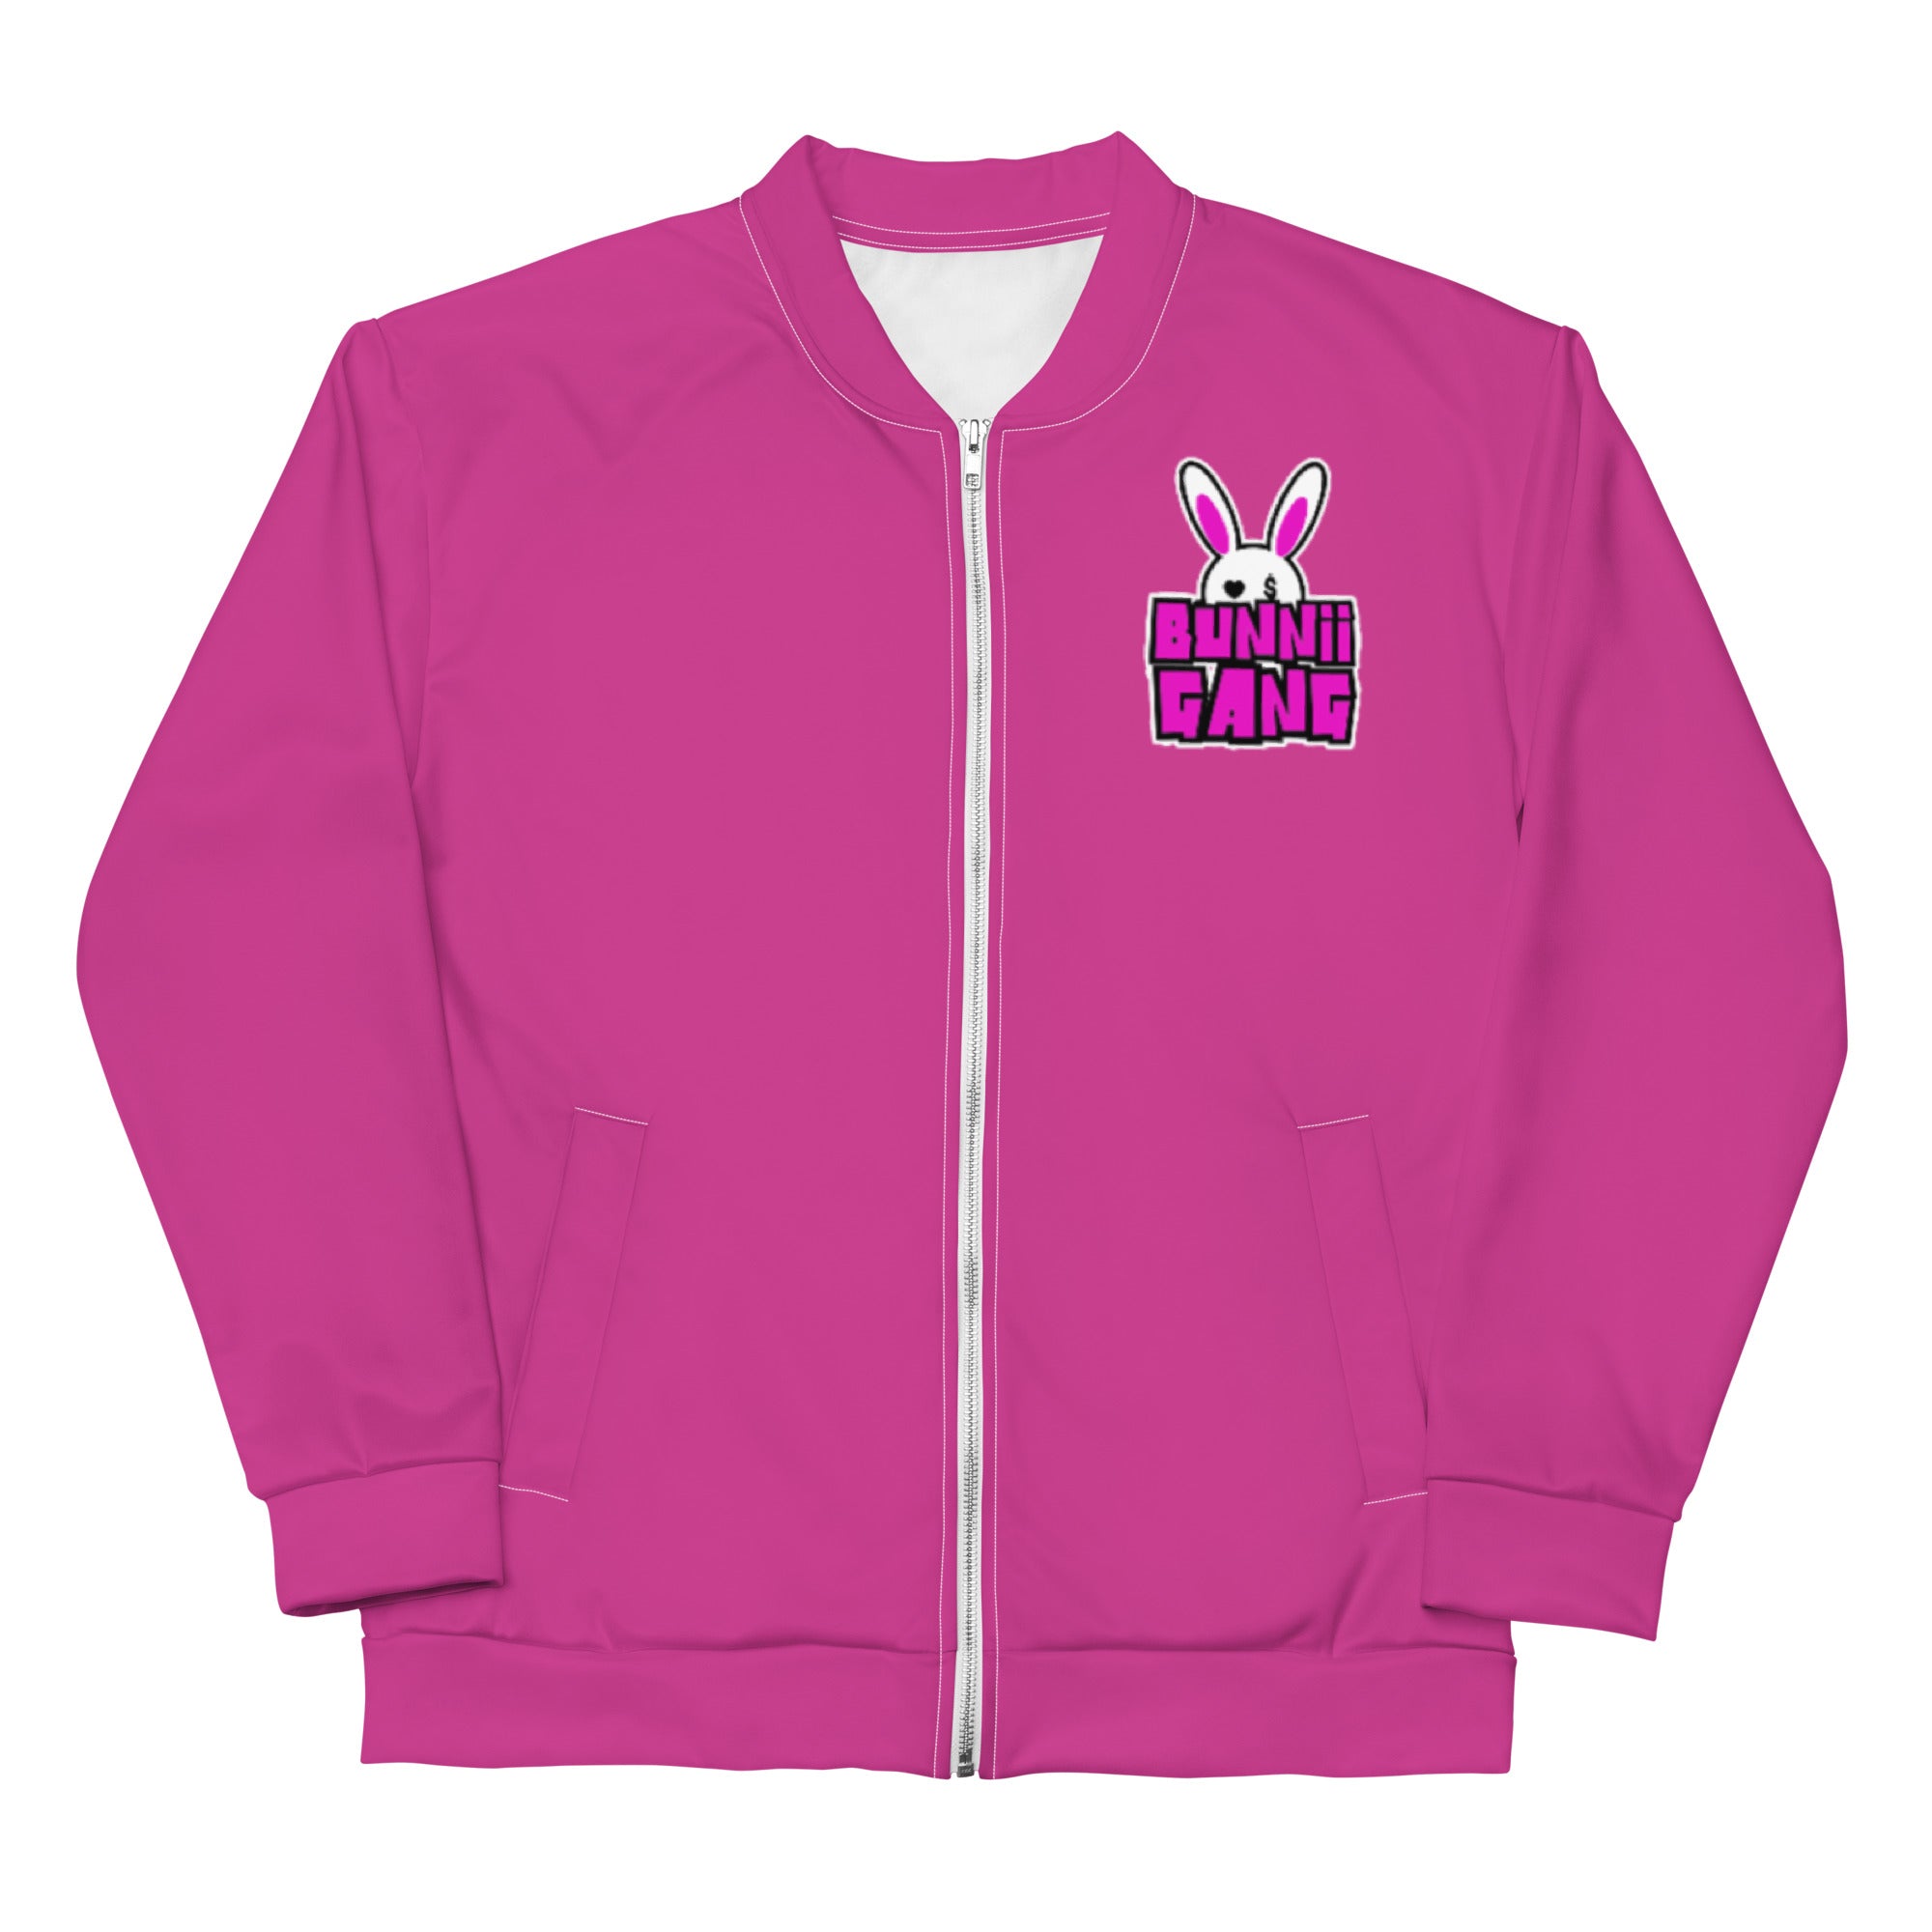 BUNNII GANG "LOGO" Pink Bomber Jacket